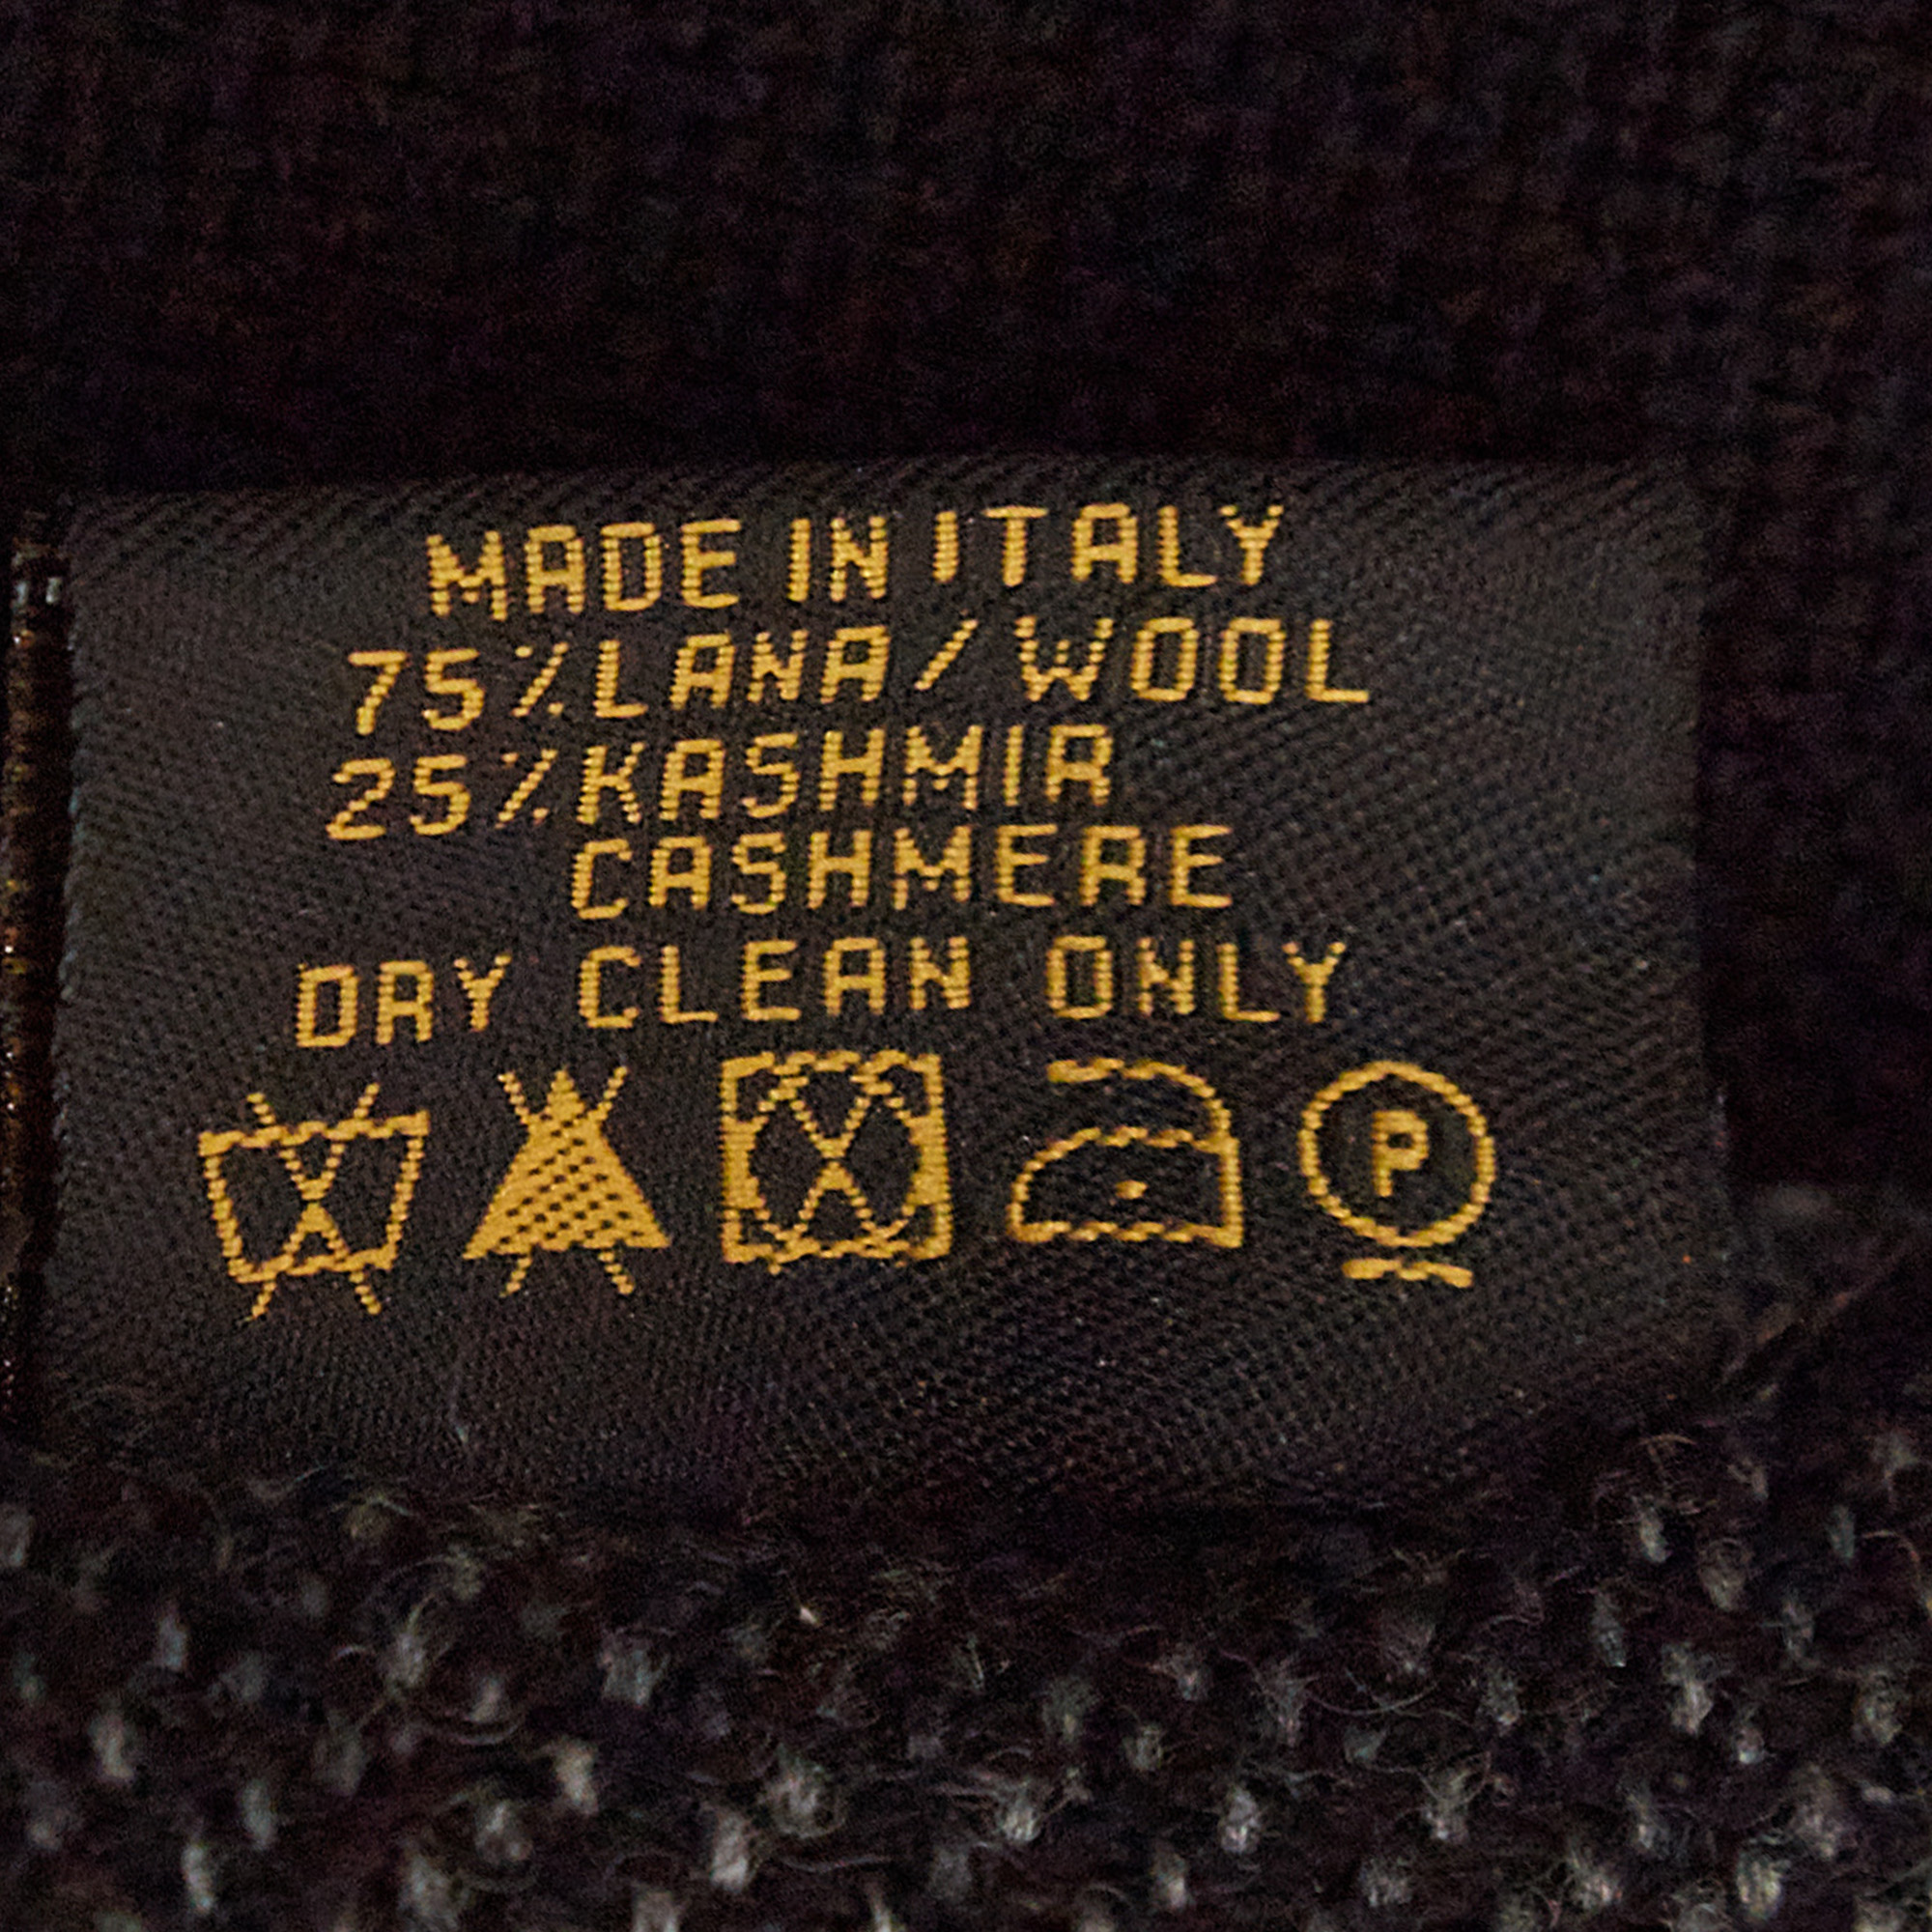 Bvlgari Black Logo Embroidered Wool & Cashmere Fringed Scarf